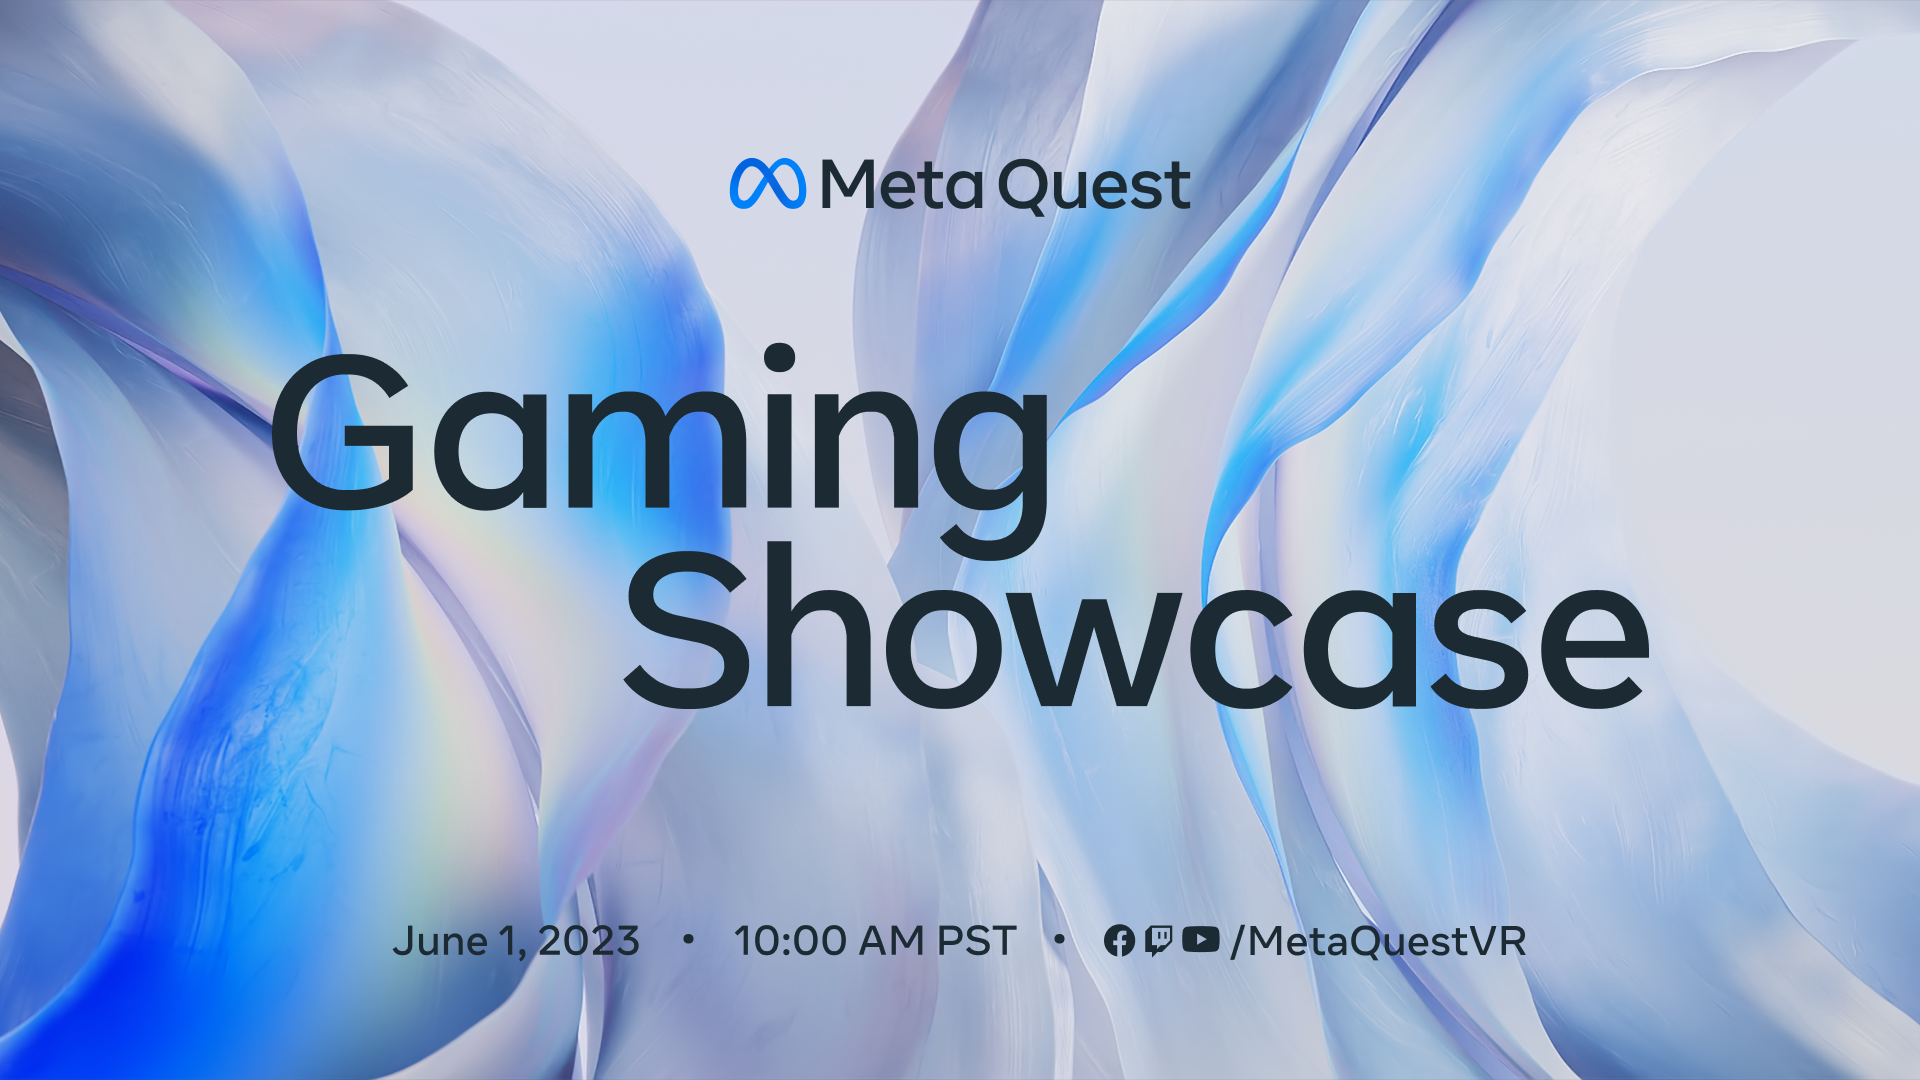 Meta Quest Gaming Showcase regresa el 1 de junio